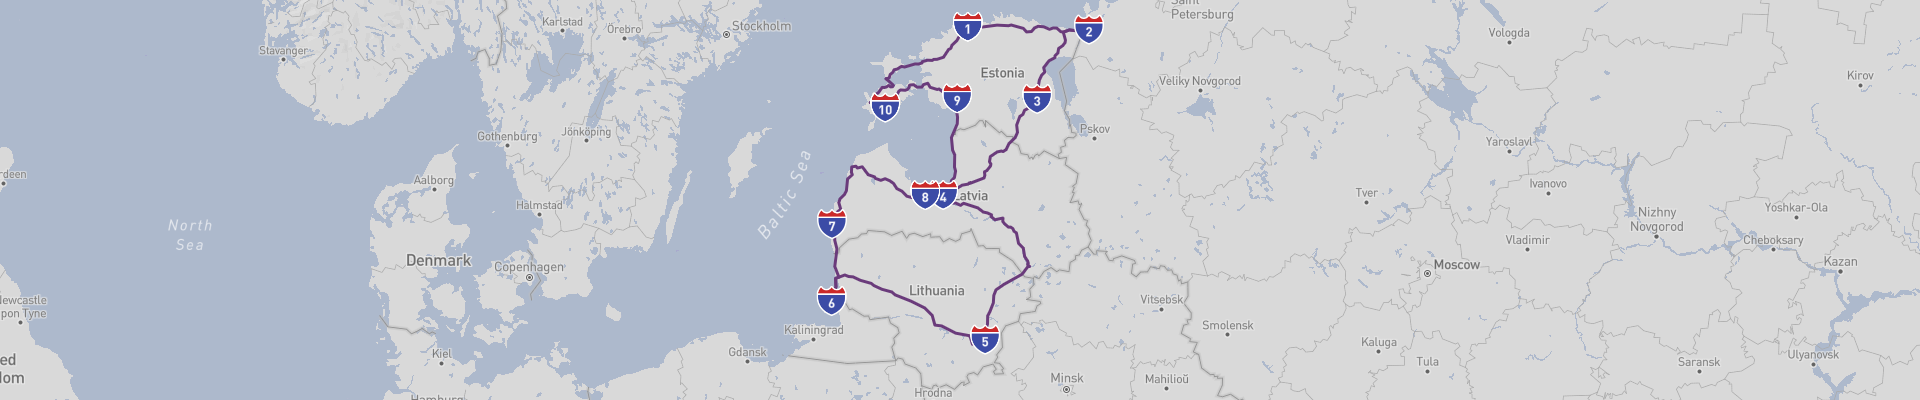 Baltic States Road Trip